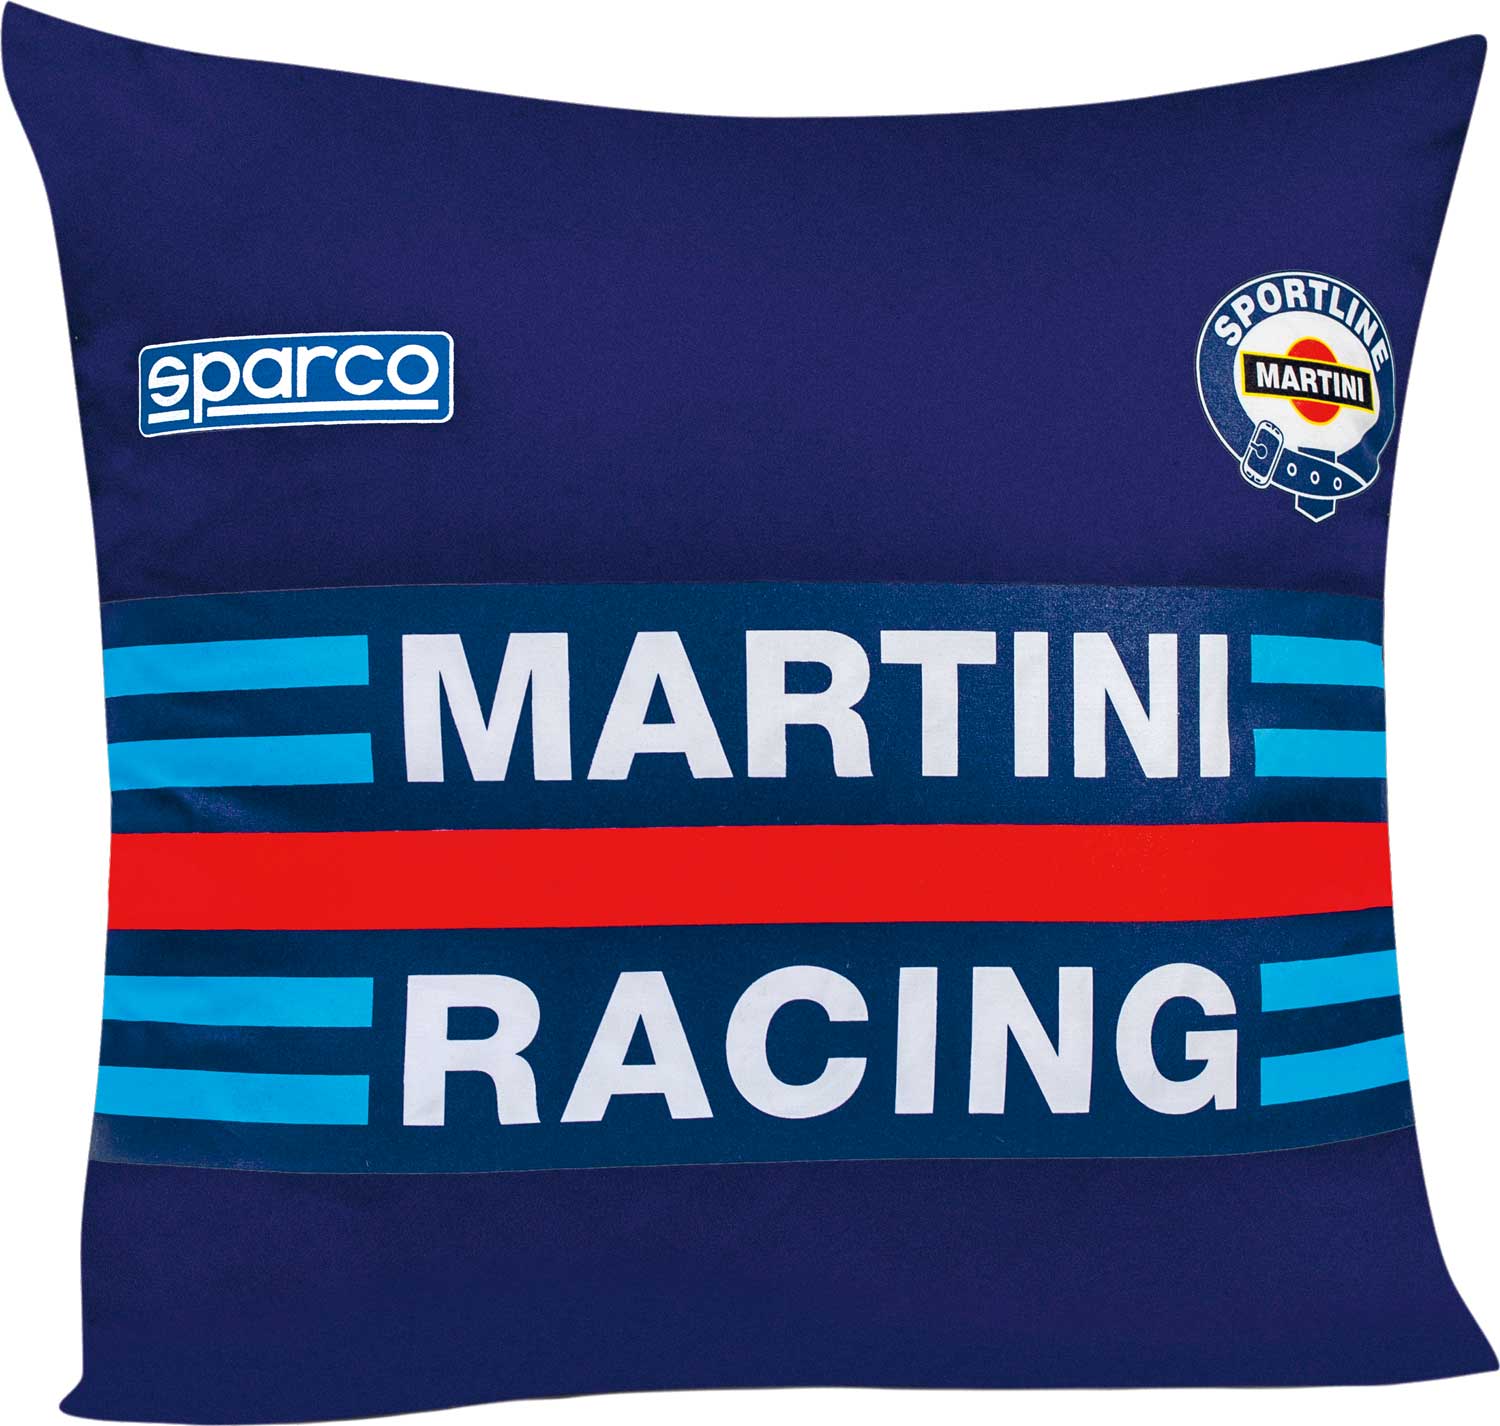 Sparco Kopfkissen Martini Racing